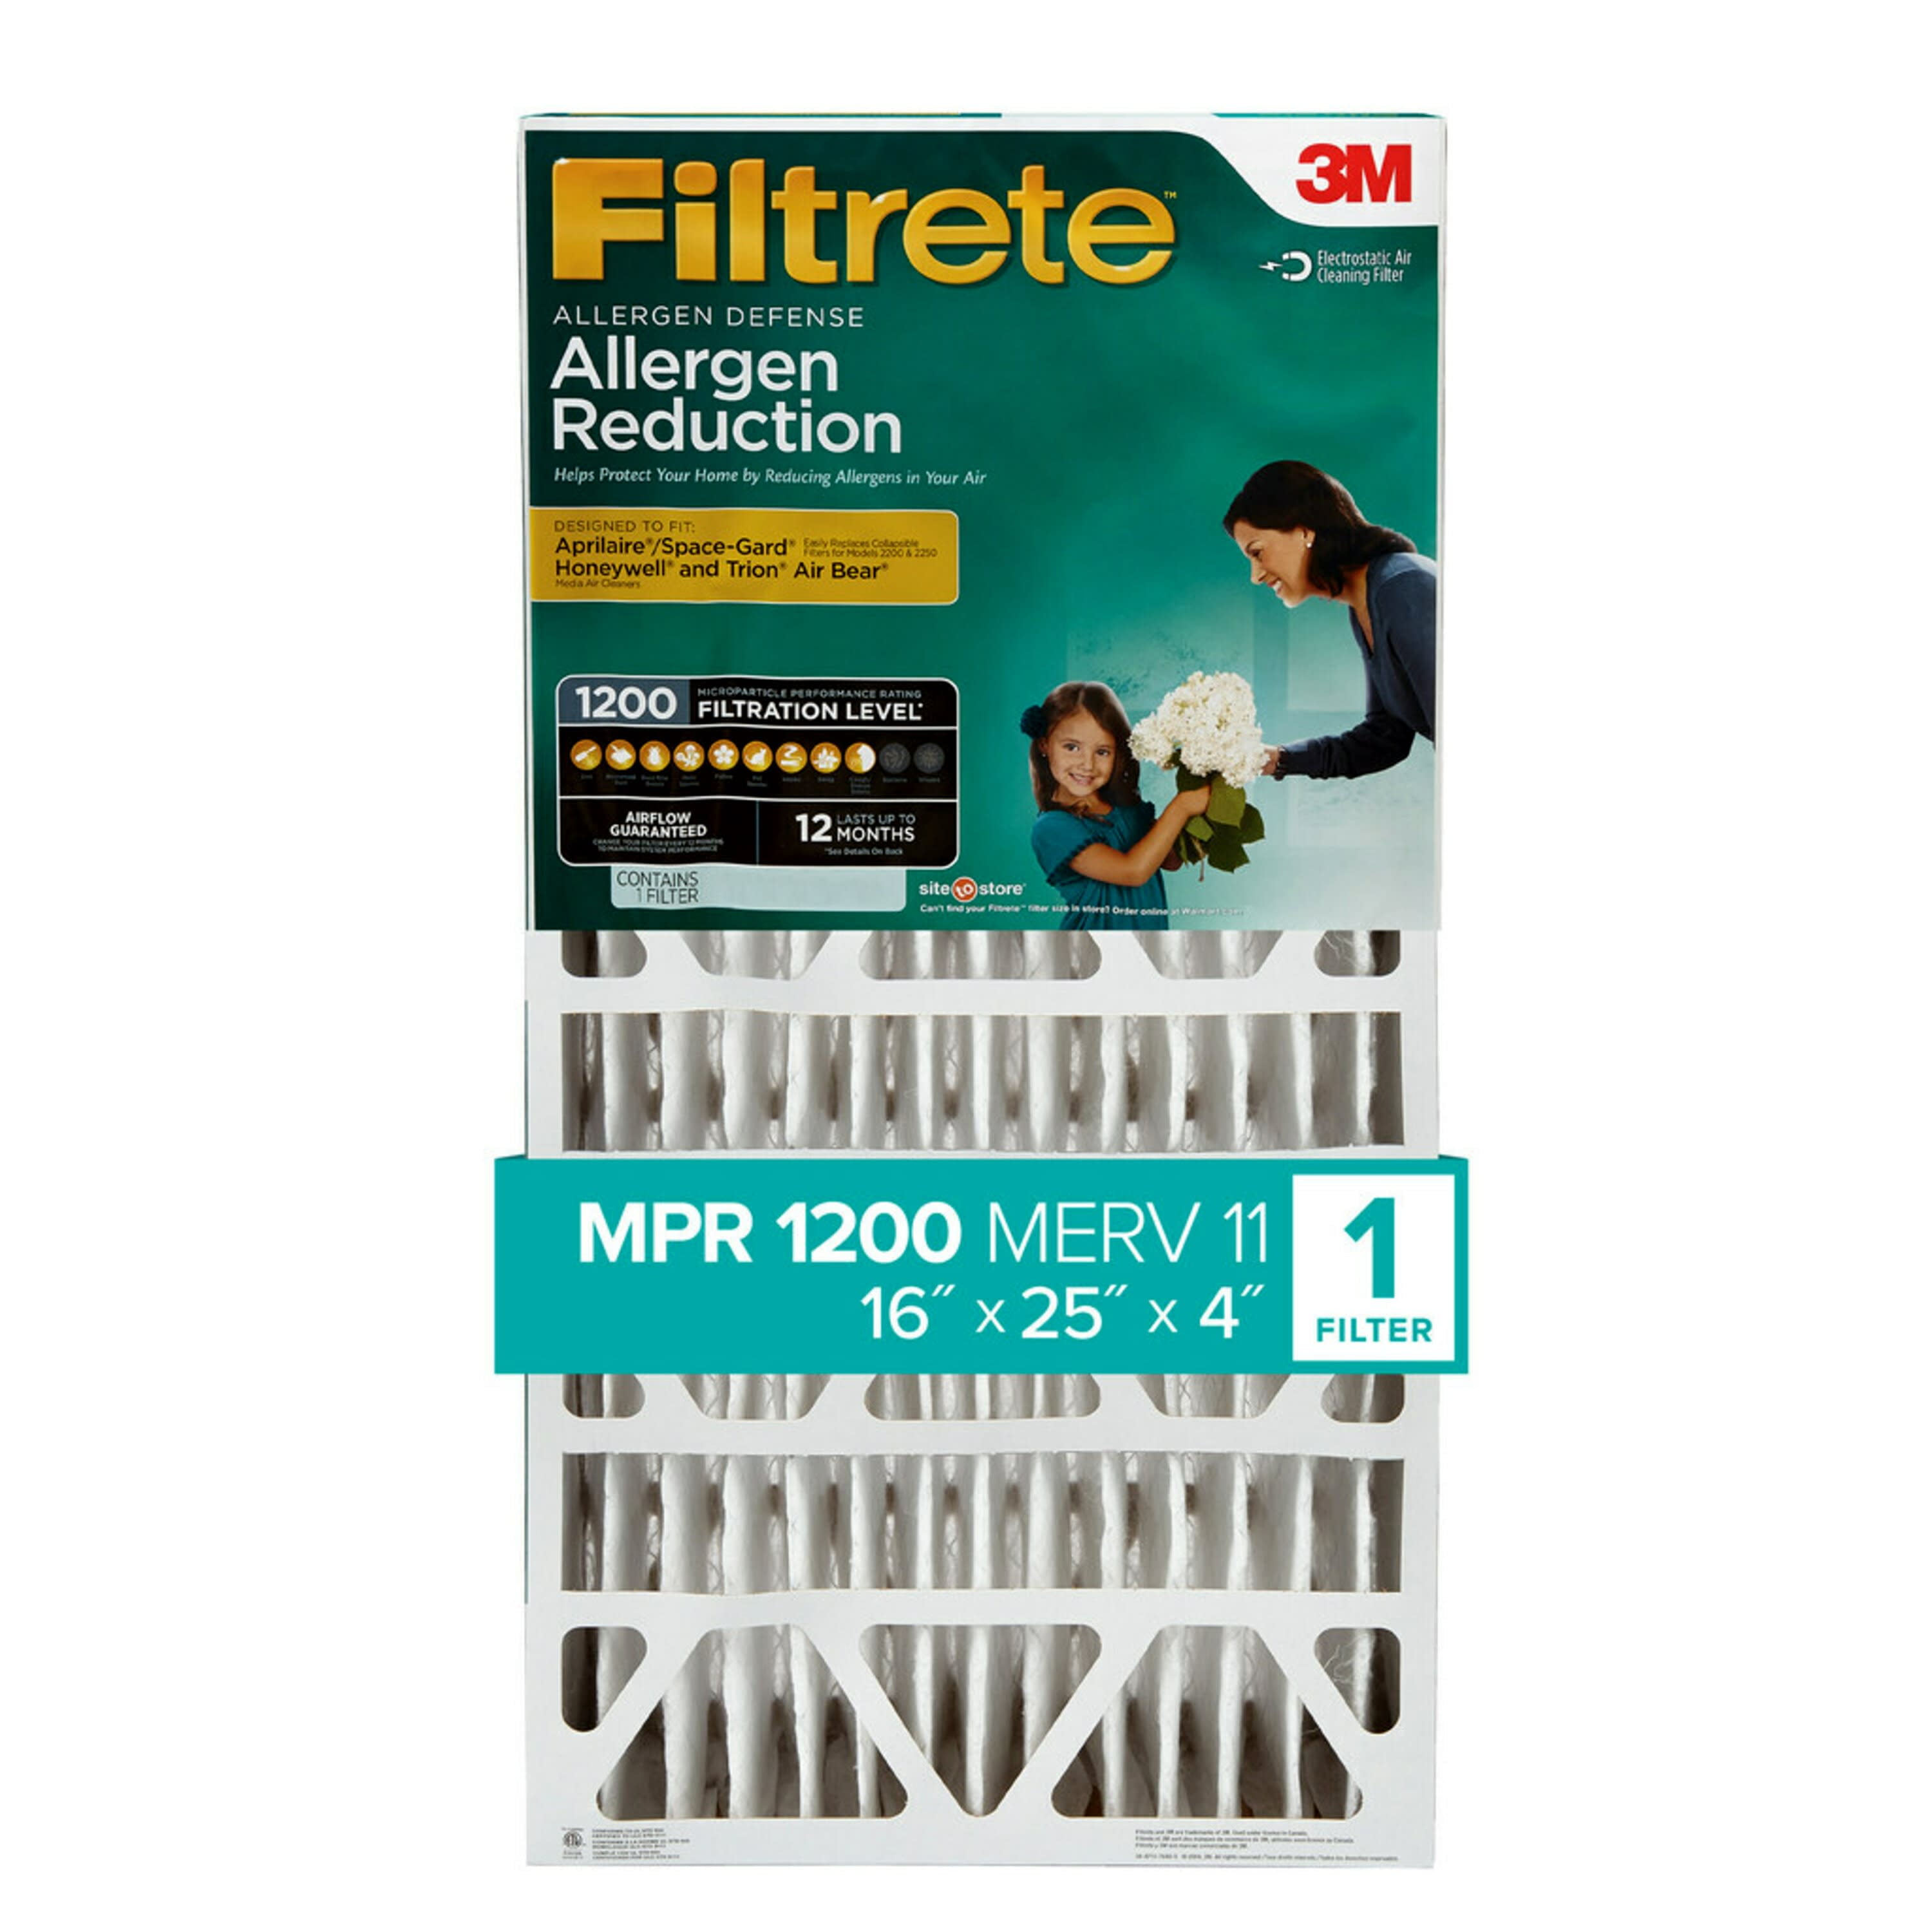 Filtrete 16x25x4, MERV 11, Allergen Reduction Deep Pleat HVAC Air and Furnace Filter, 1200 MPR, 1 Filter